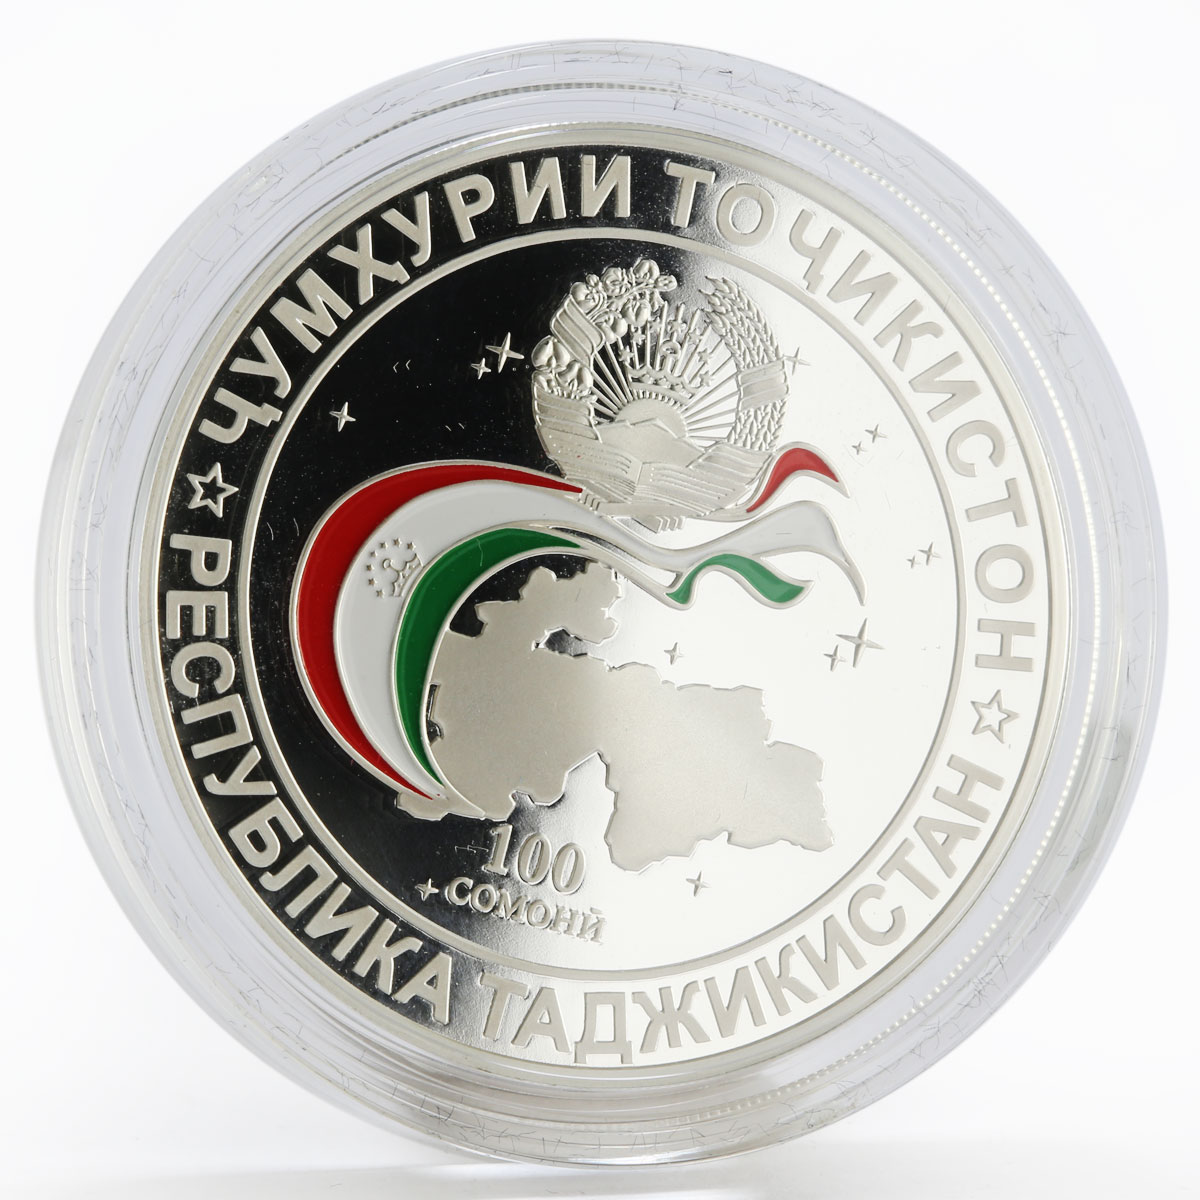 Tajikistan 100 somoni 20 years Commonwealth Independent States proof silver 2011